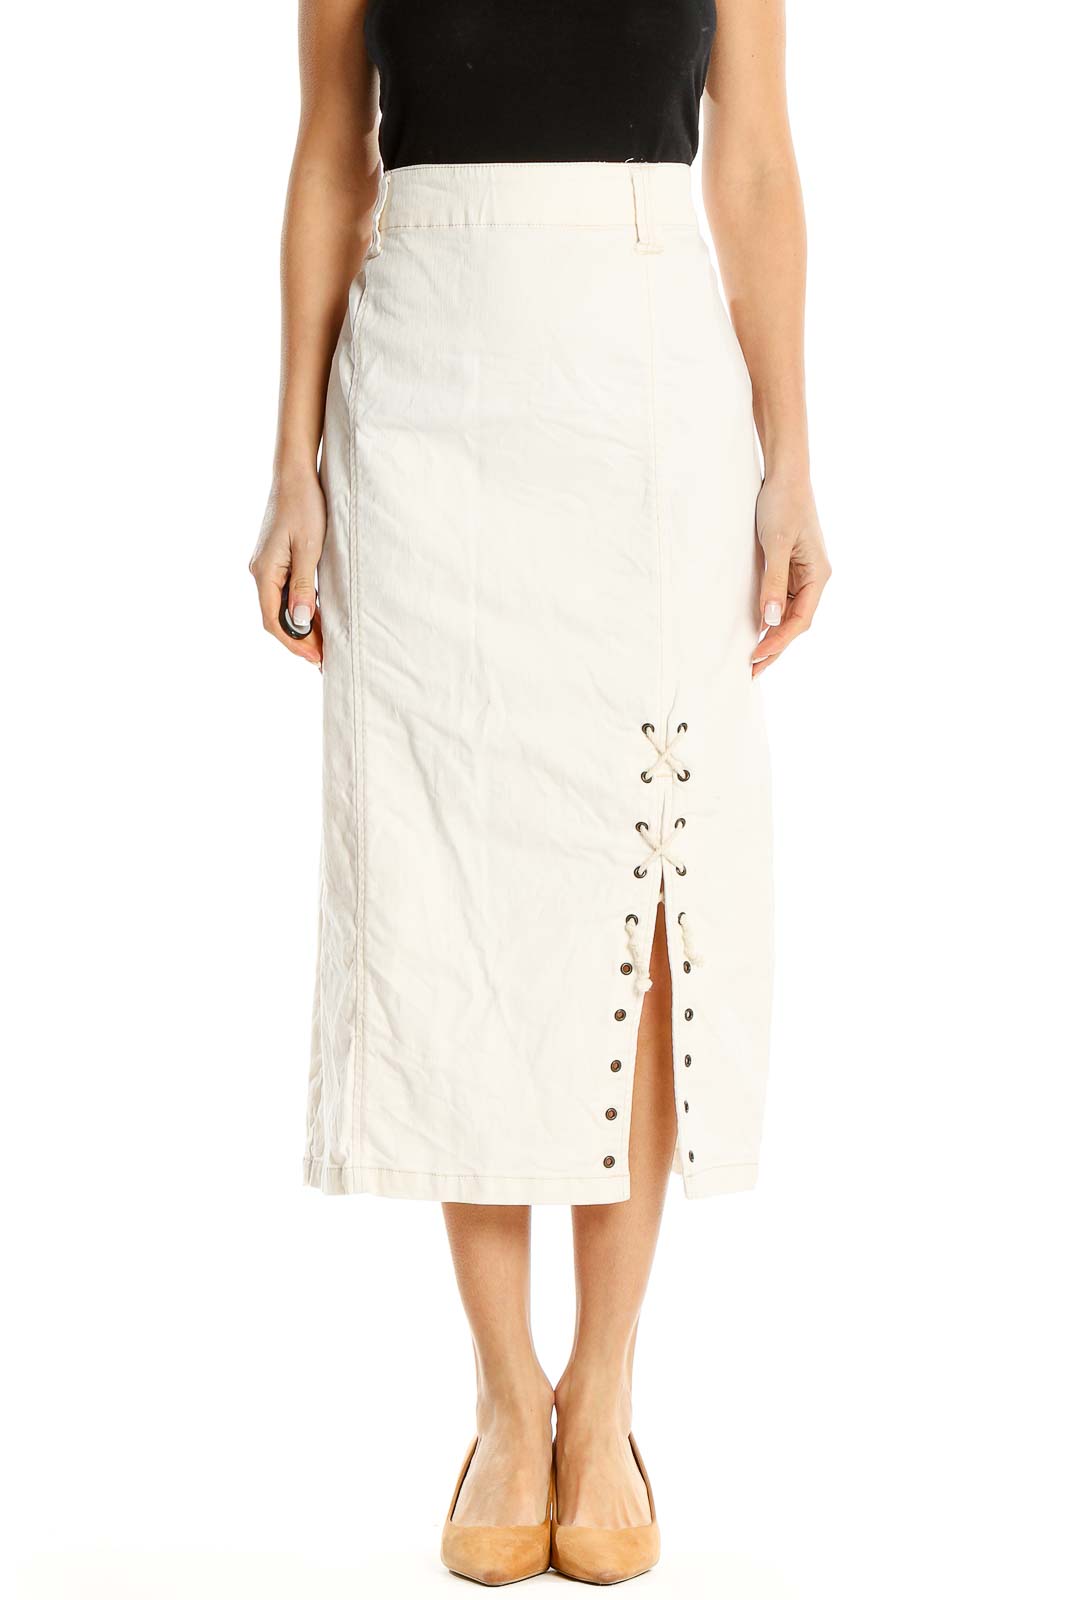 Lace-Up Slit White Midi Skirt Front